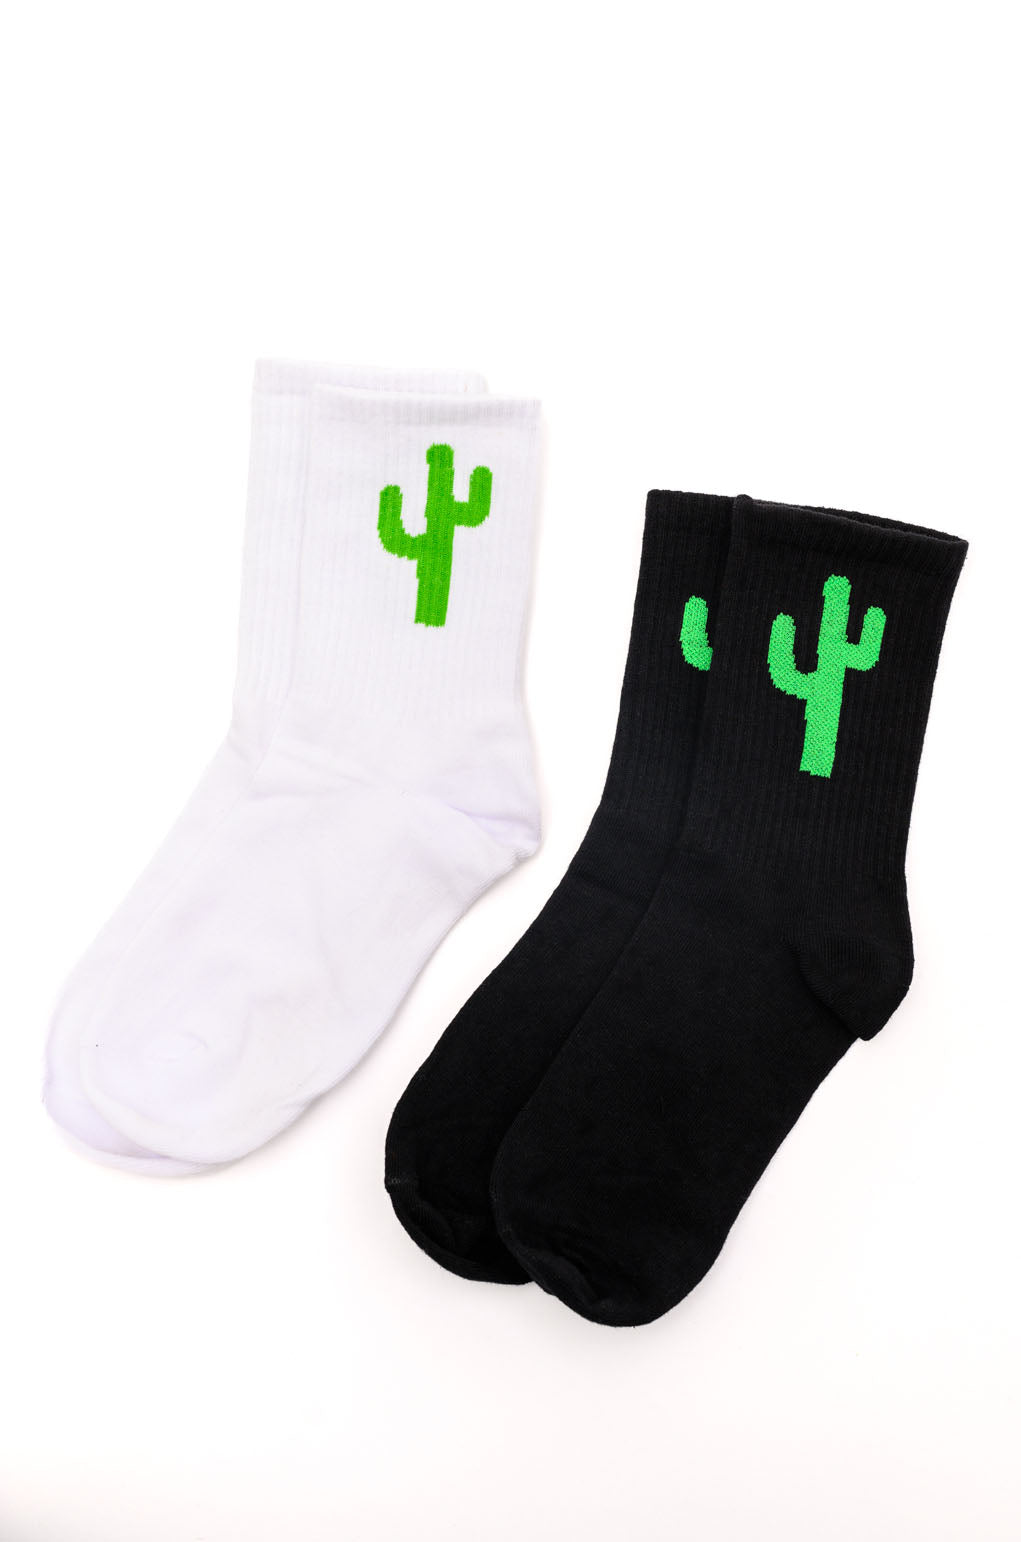 Sweet Socks Cactus Ave Shops